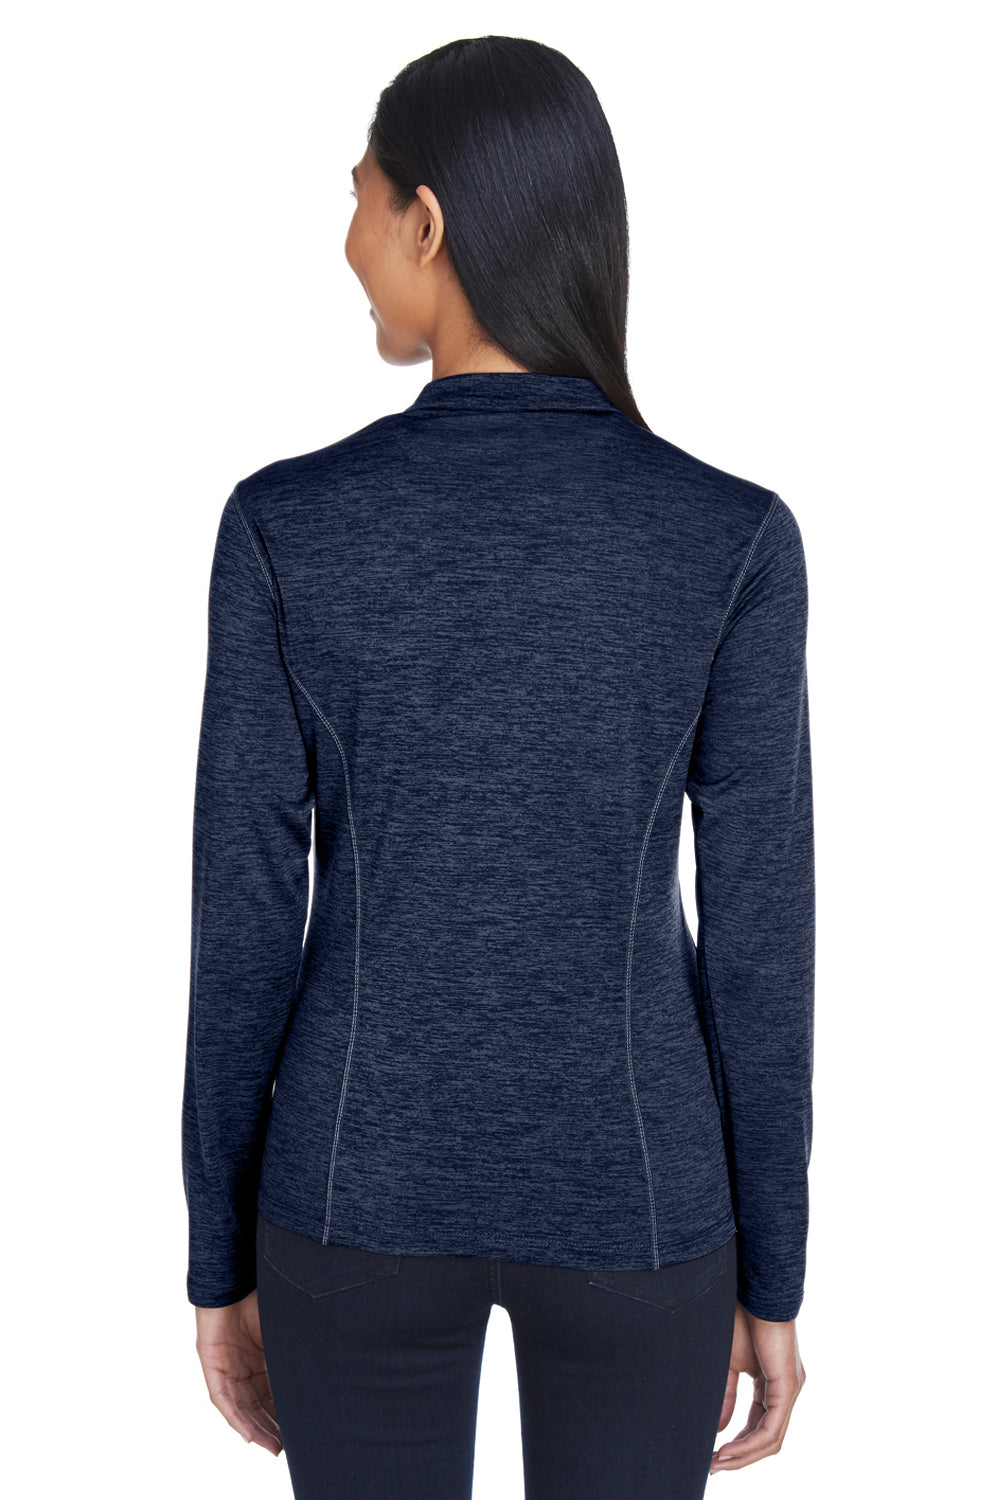 Core 365 CE401W Womens Kinetic Performance Moisture Wicking 1/4 Zip Sweatshirt Navy Blue/Carbon Grey Back